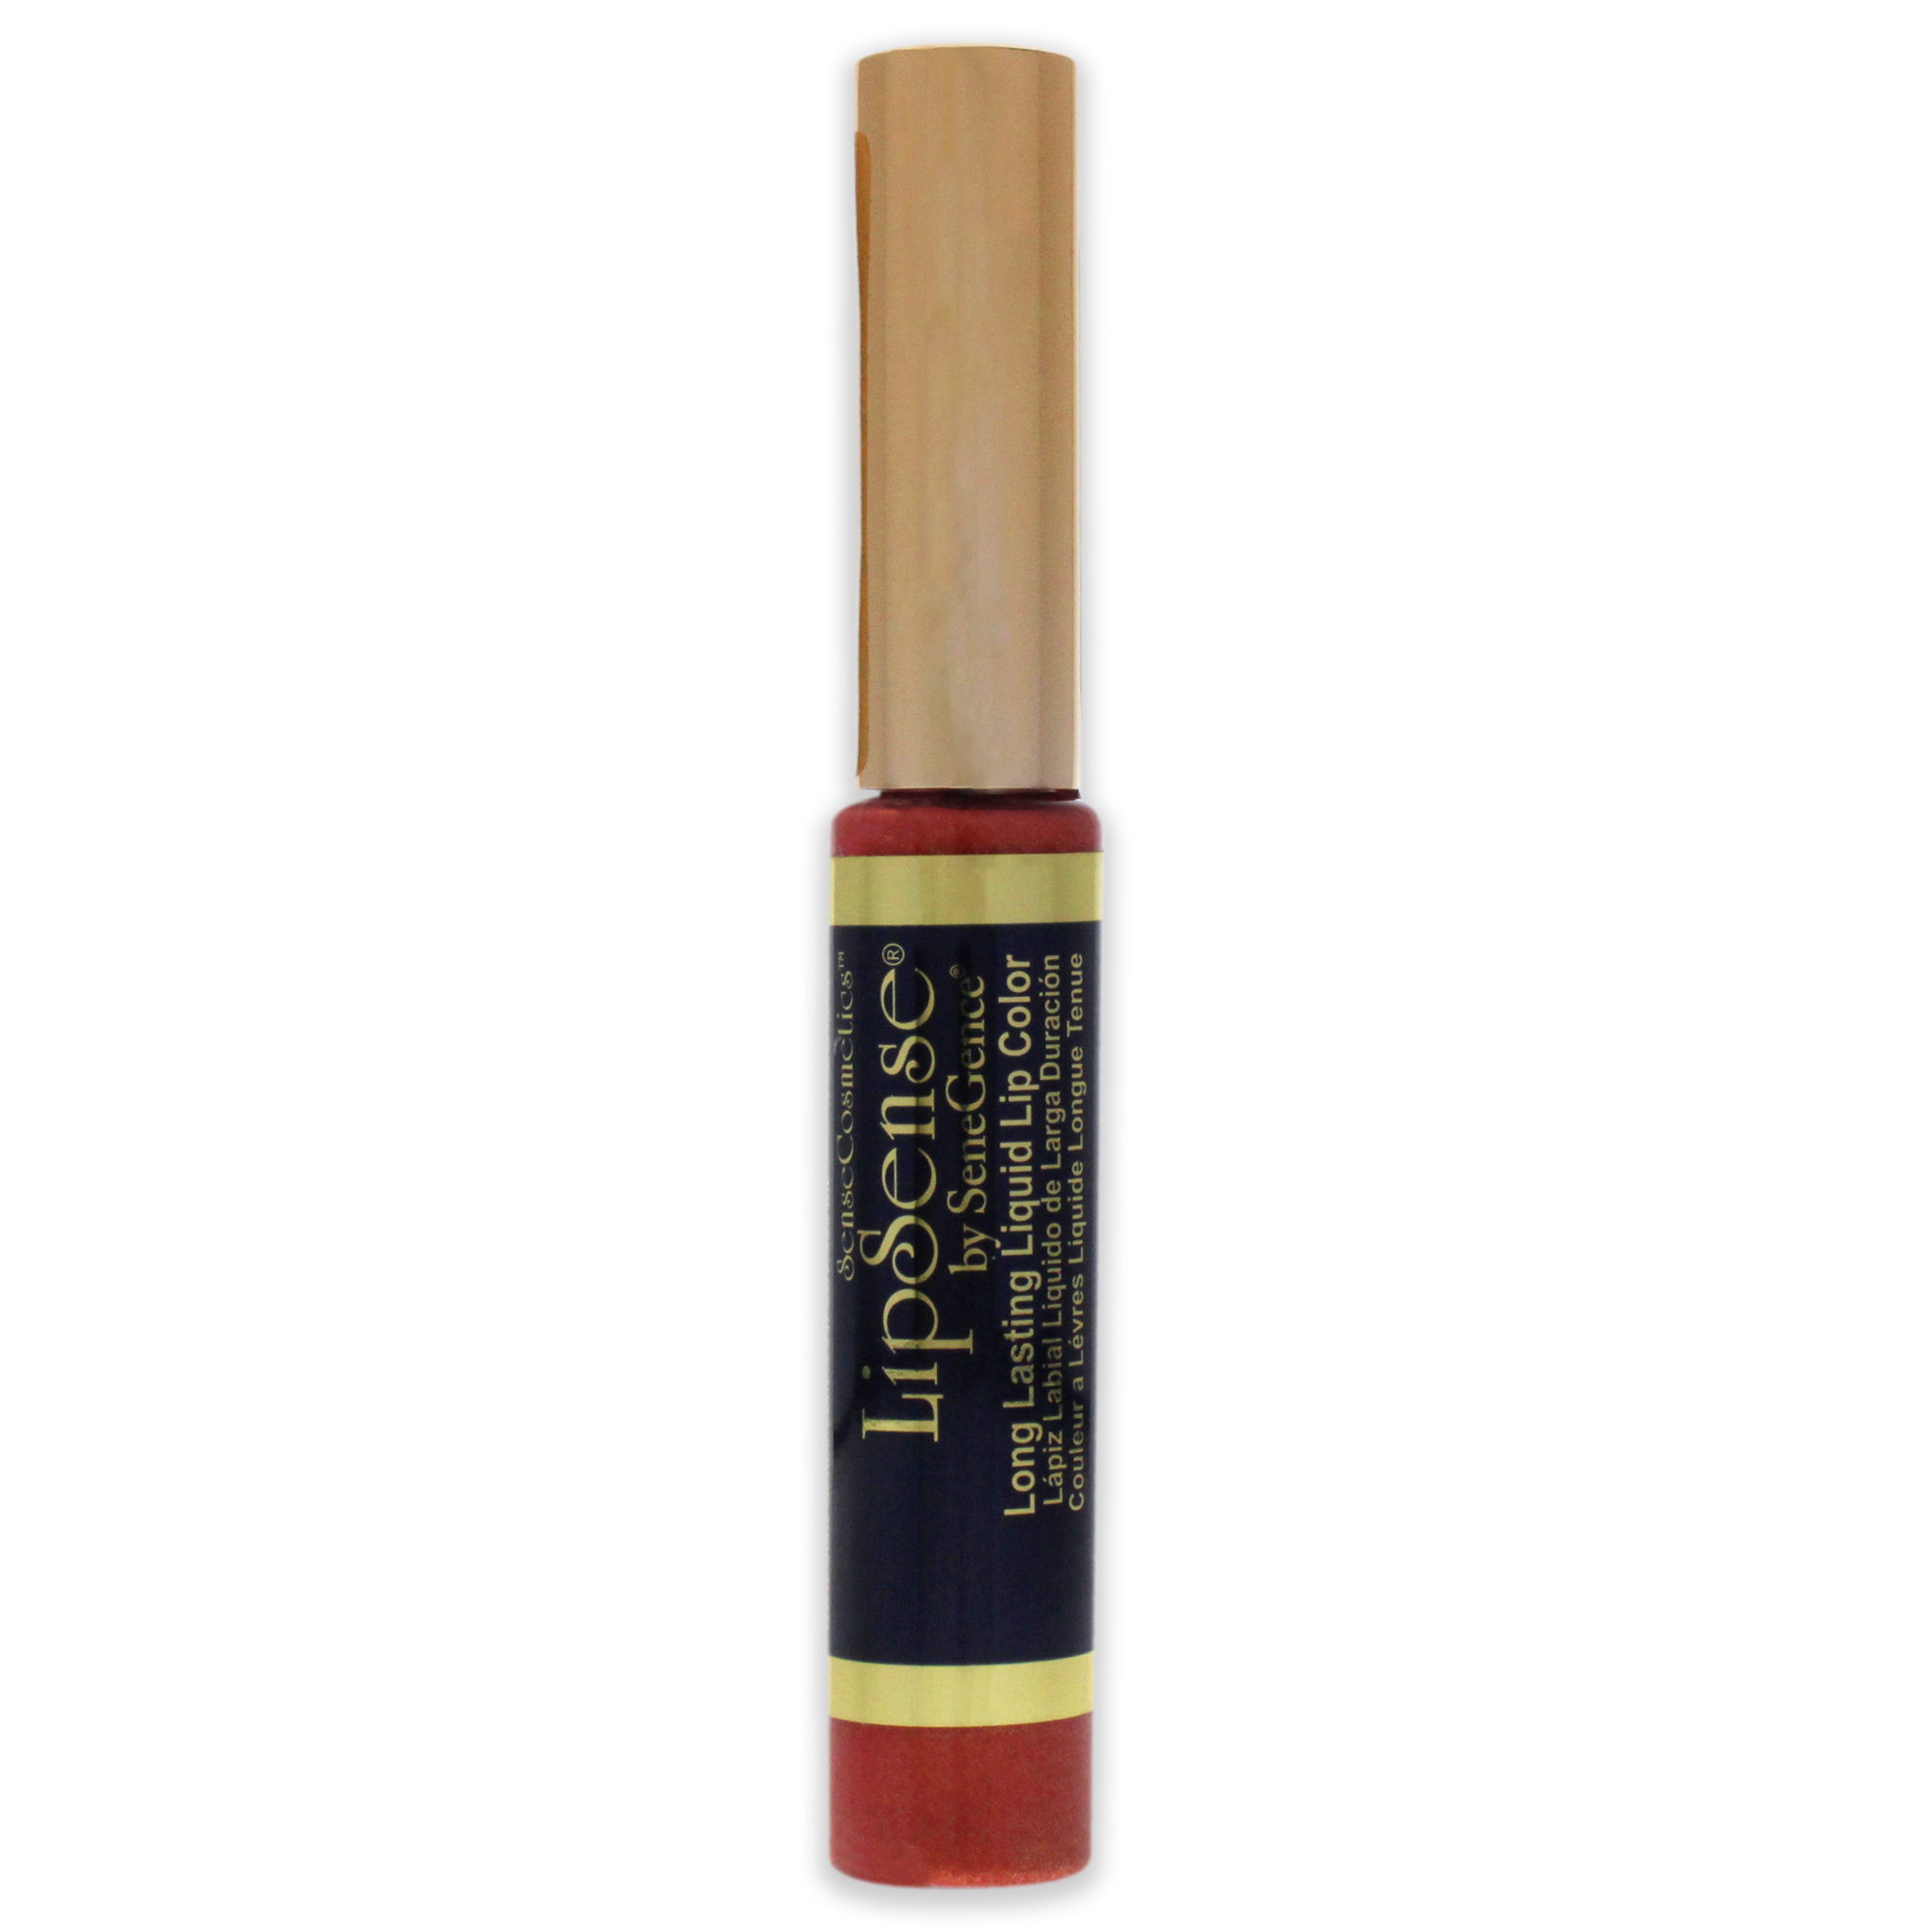 LipSense Liquid Lip Color - Pomegranate by SeneGence for Women - 0.25 oz Lipstick